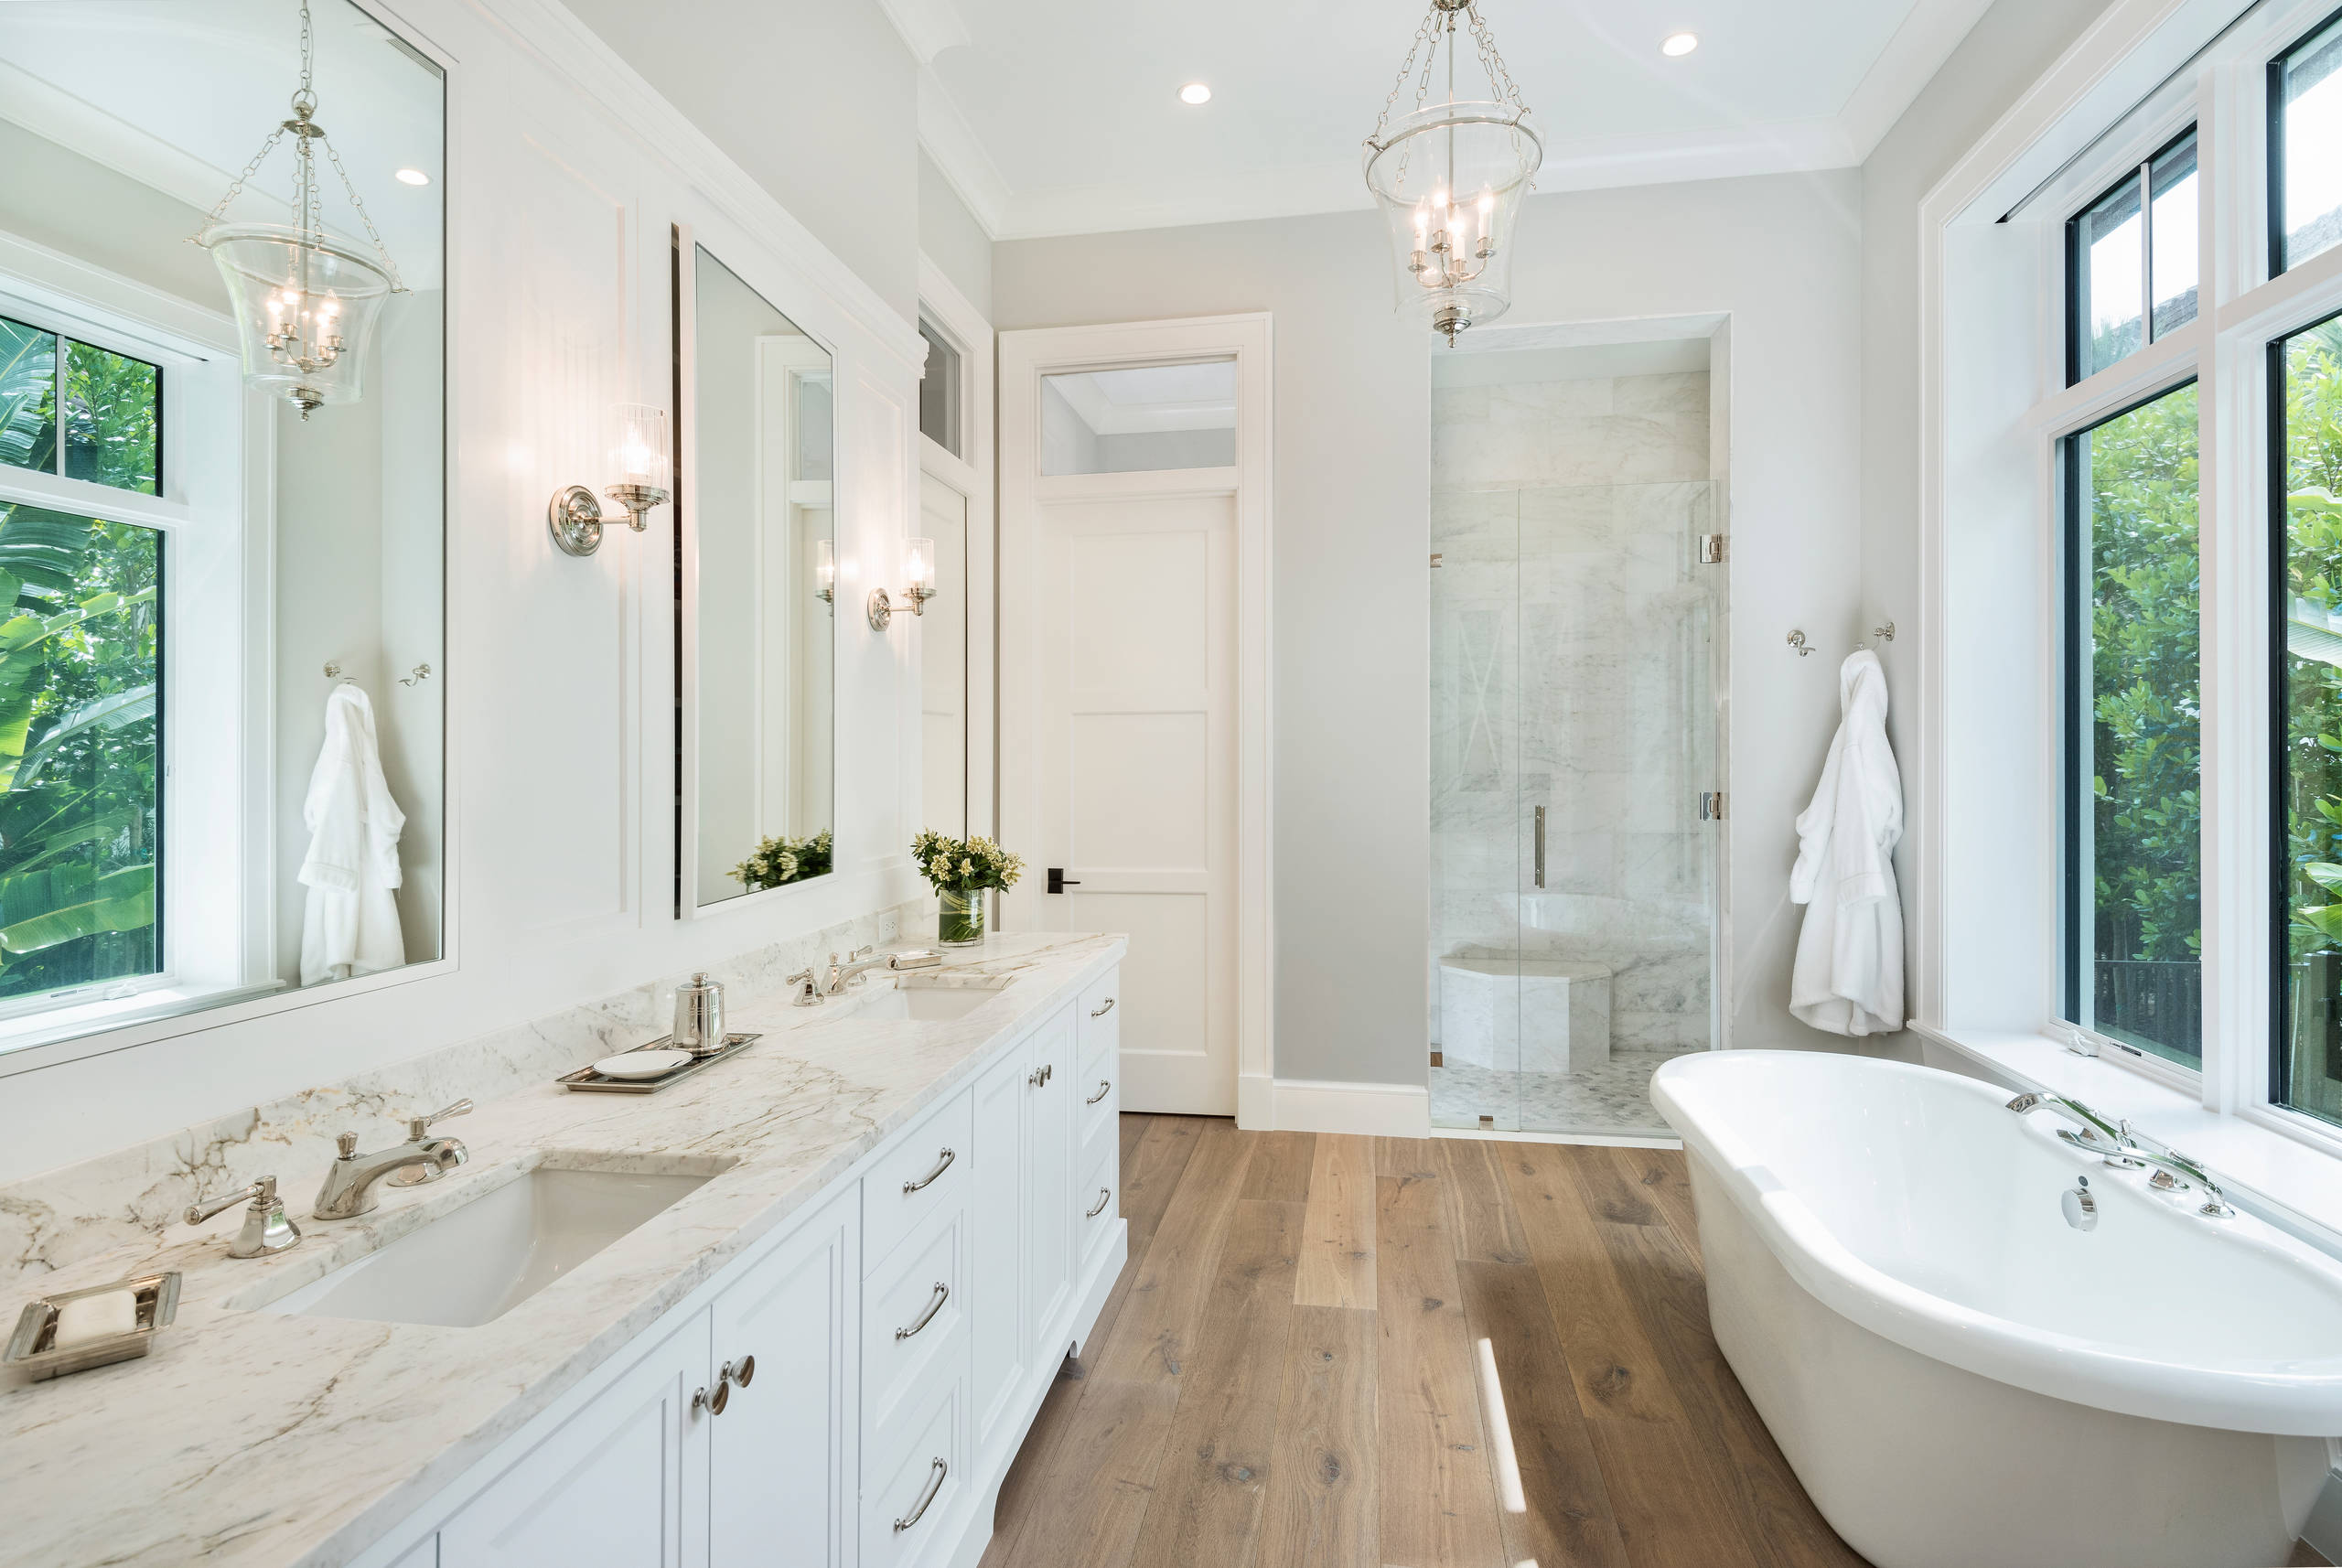 75 Beautiful Light Wood Floor Bathroom, Bathrooms With Hardwood Floors Pictures